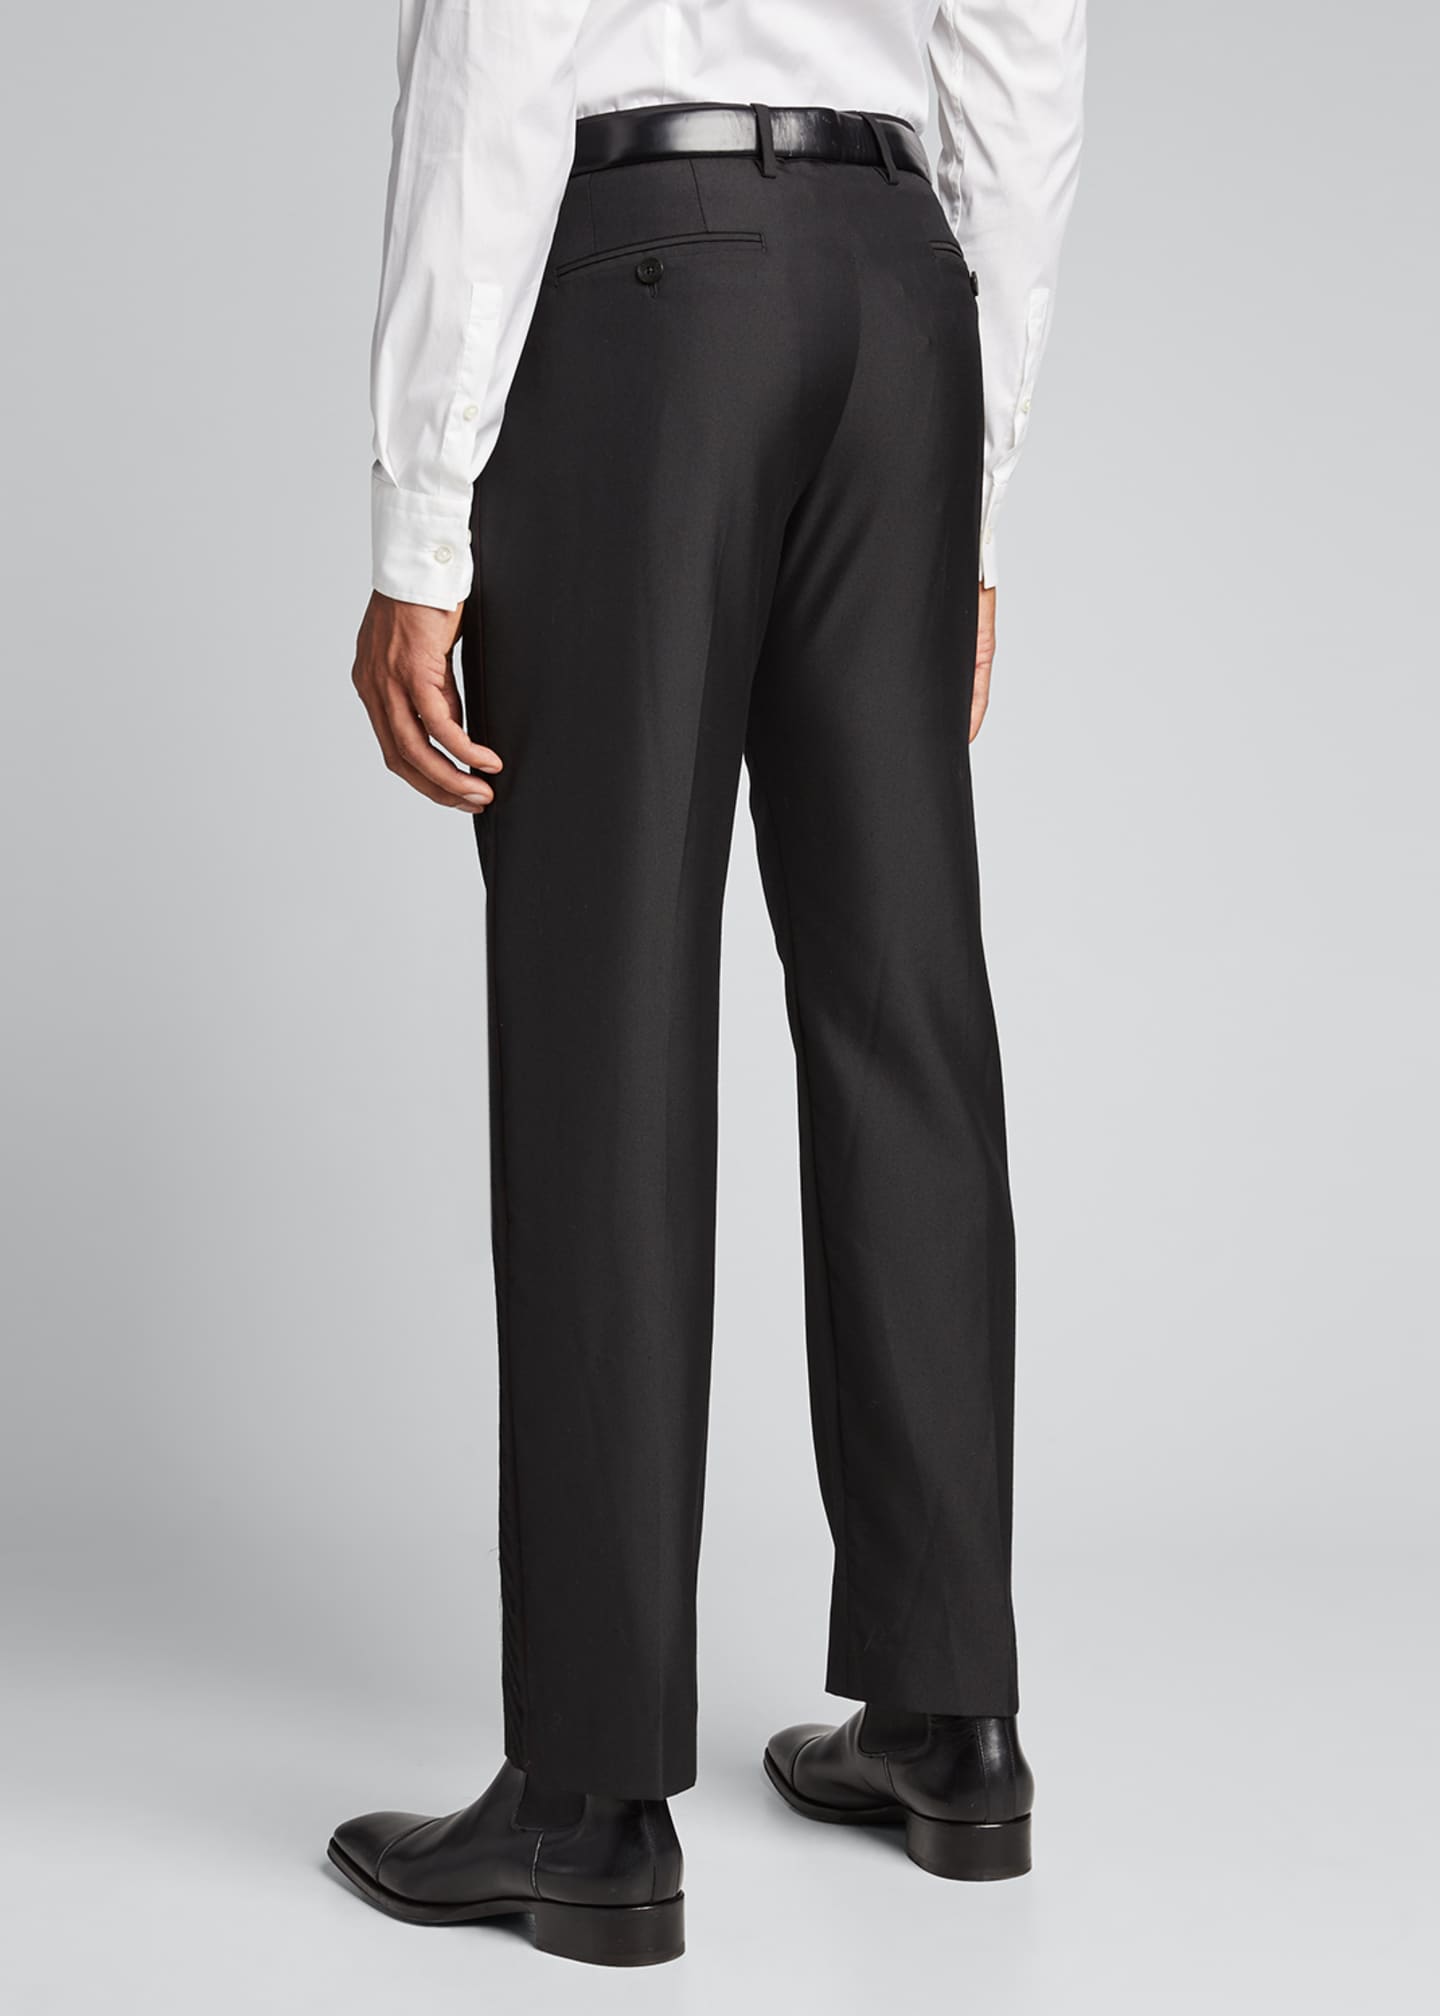 Etro Men's Chevron Side-Stripe Tuxedo Pants - Bergdorf Goodman